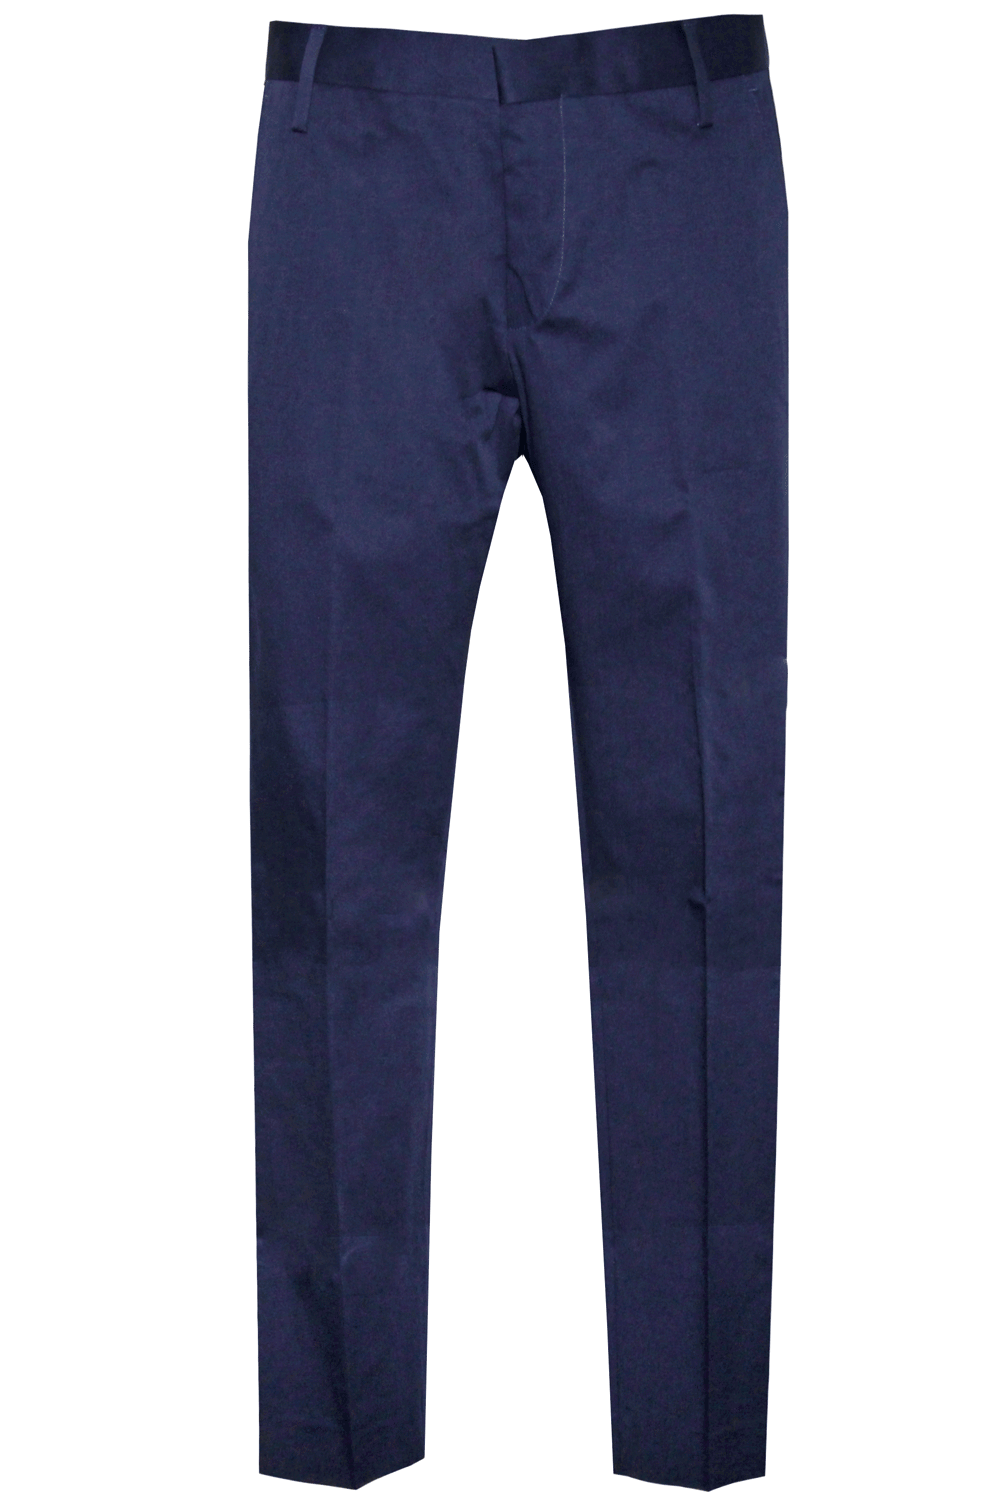 Pantalone blu corto-ENTRE AMIS Pantaloni e jeans ENTRE AMIS   